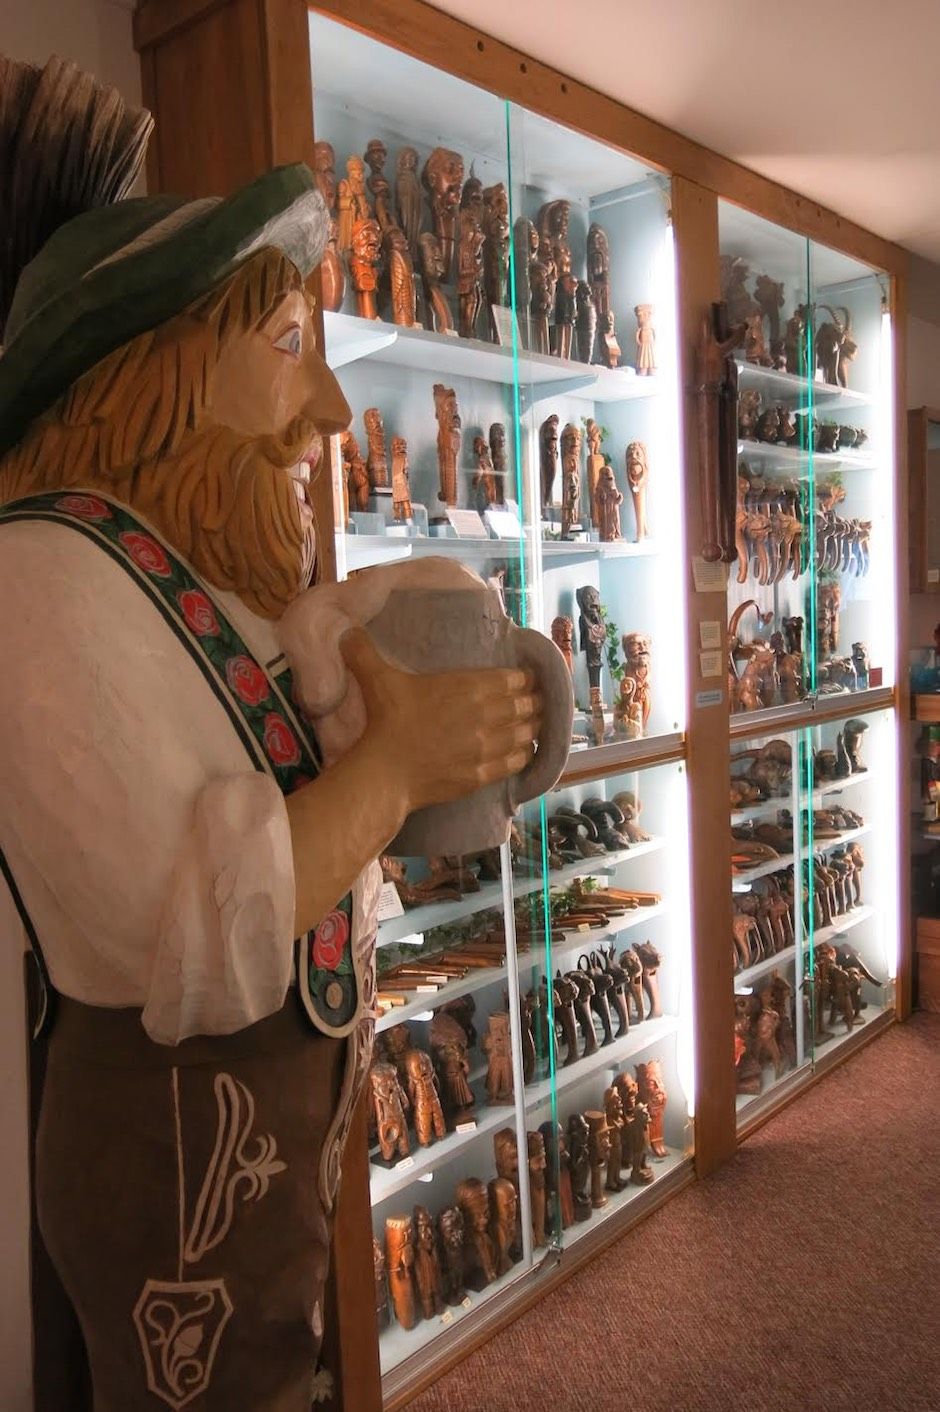 The Leavenworth Nutcracker Museum